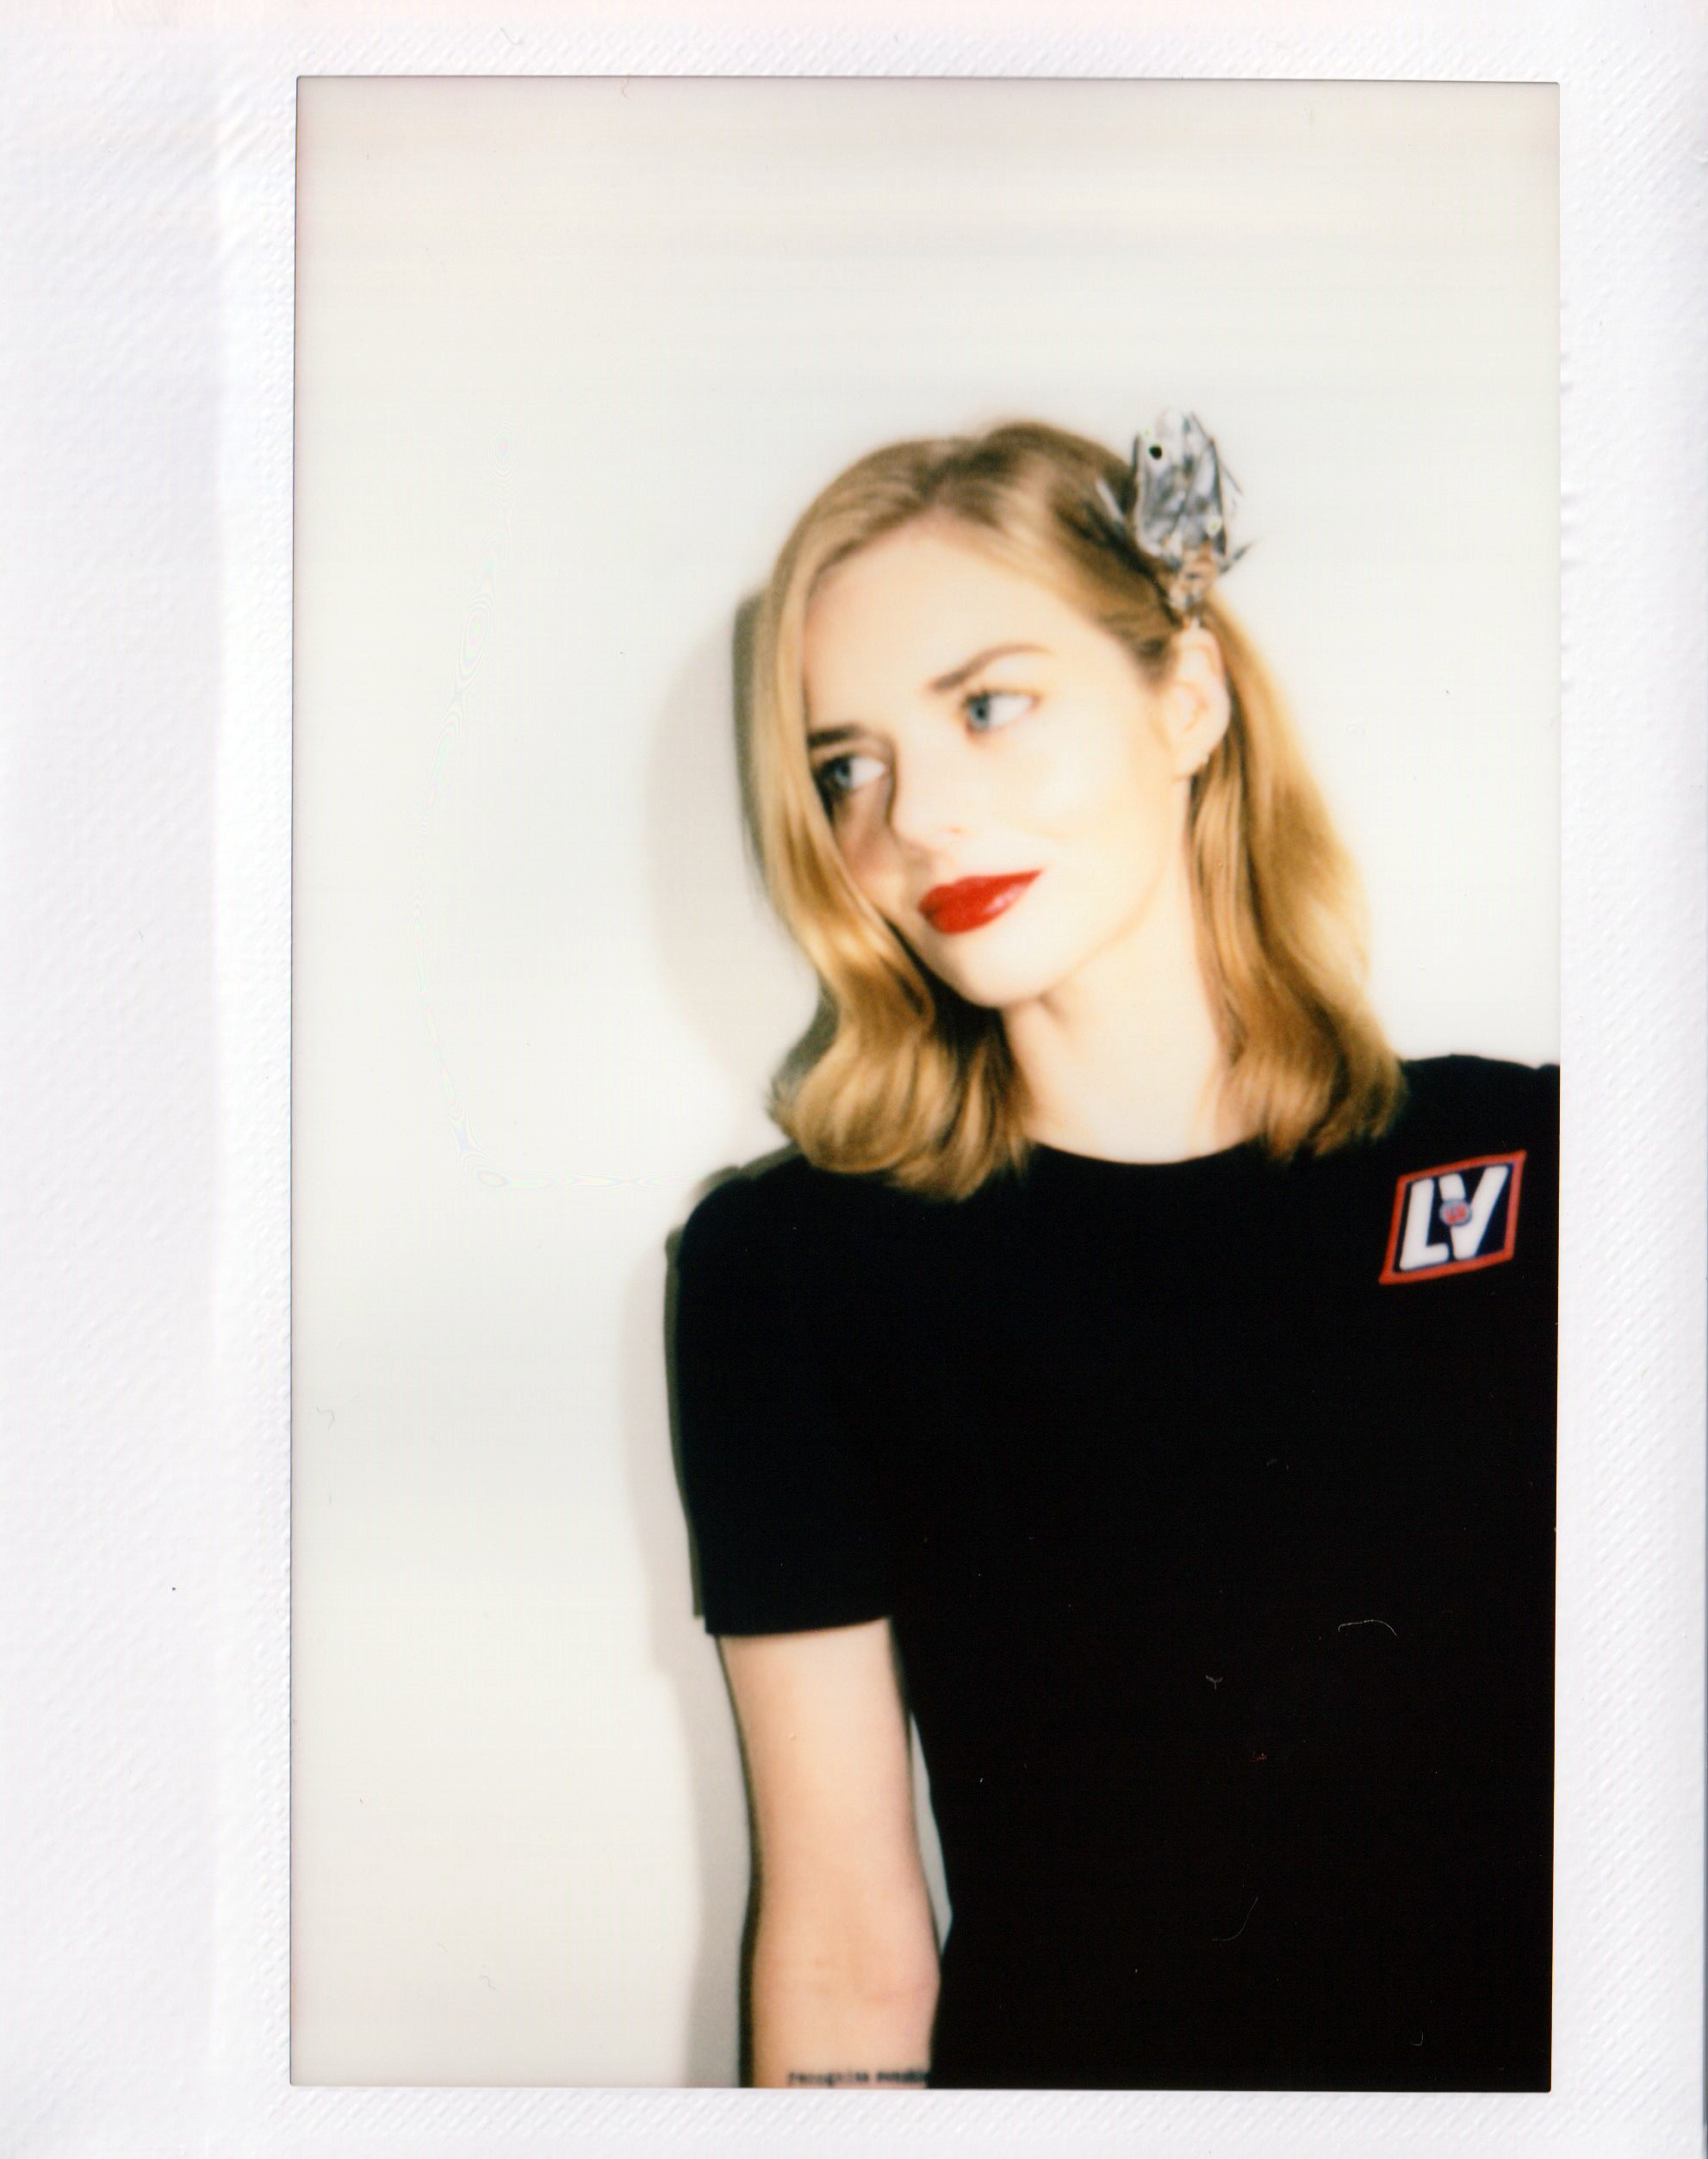 Photos n°4 : Samara Weaving Polaroids!